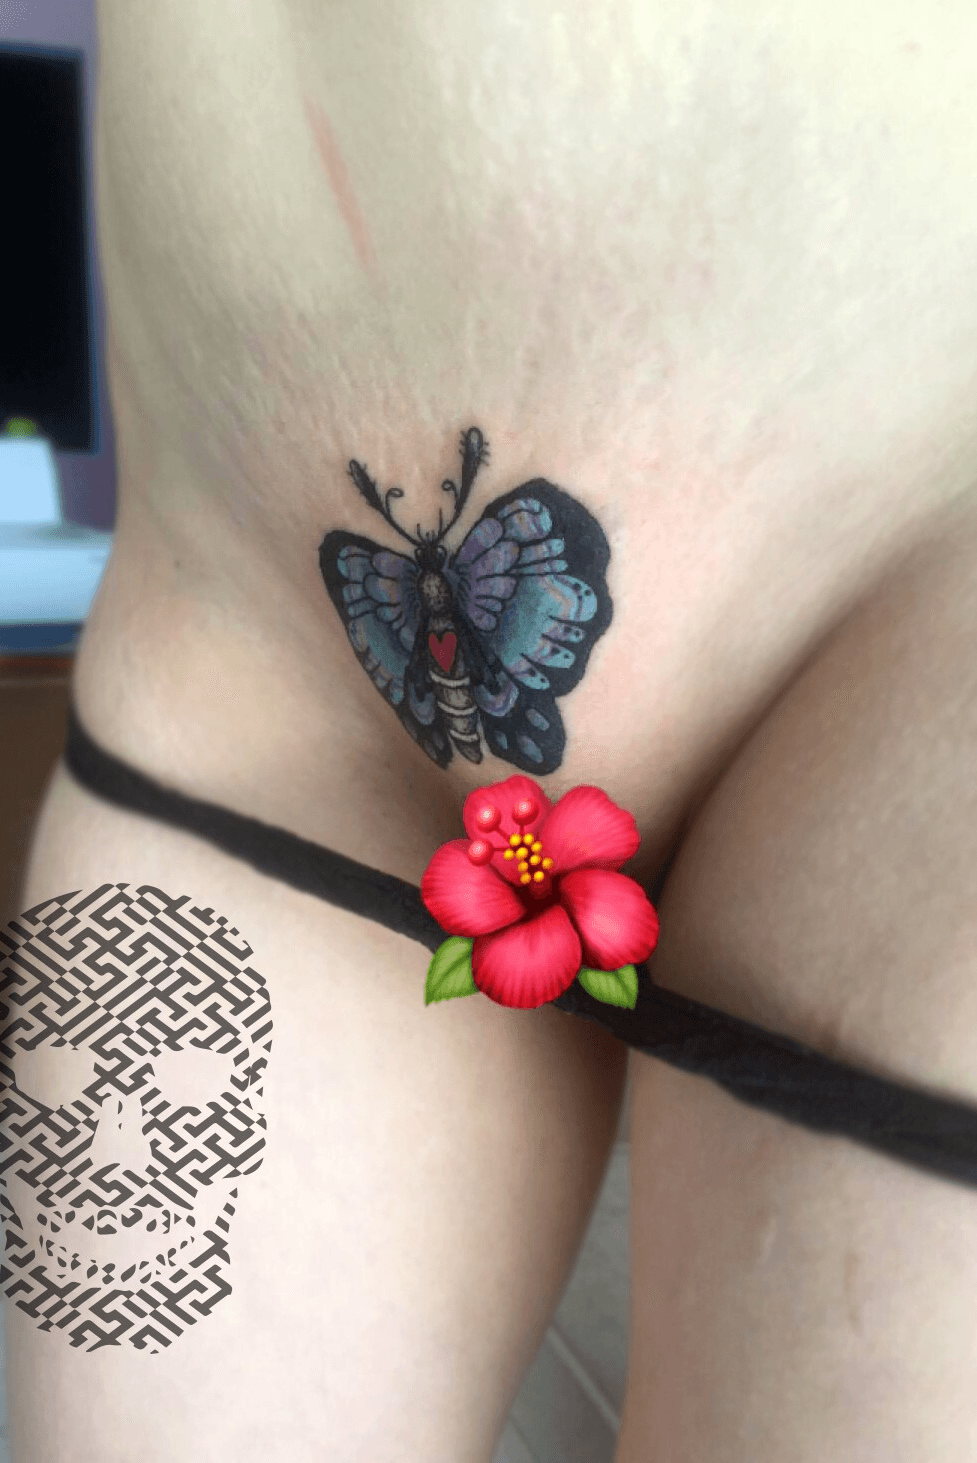 Butterfly vagina tatto